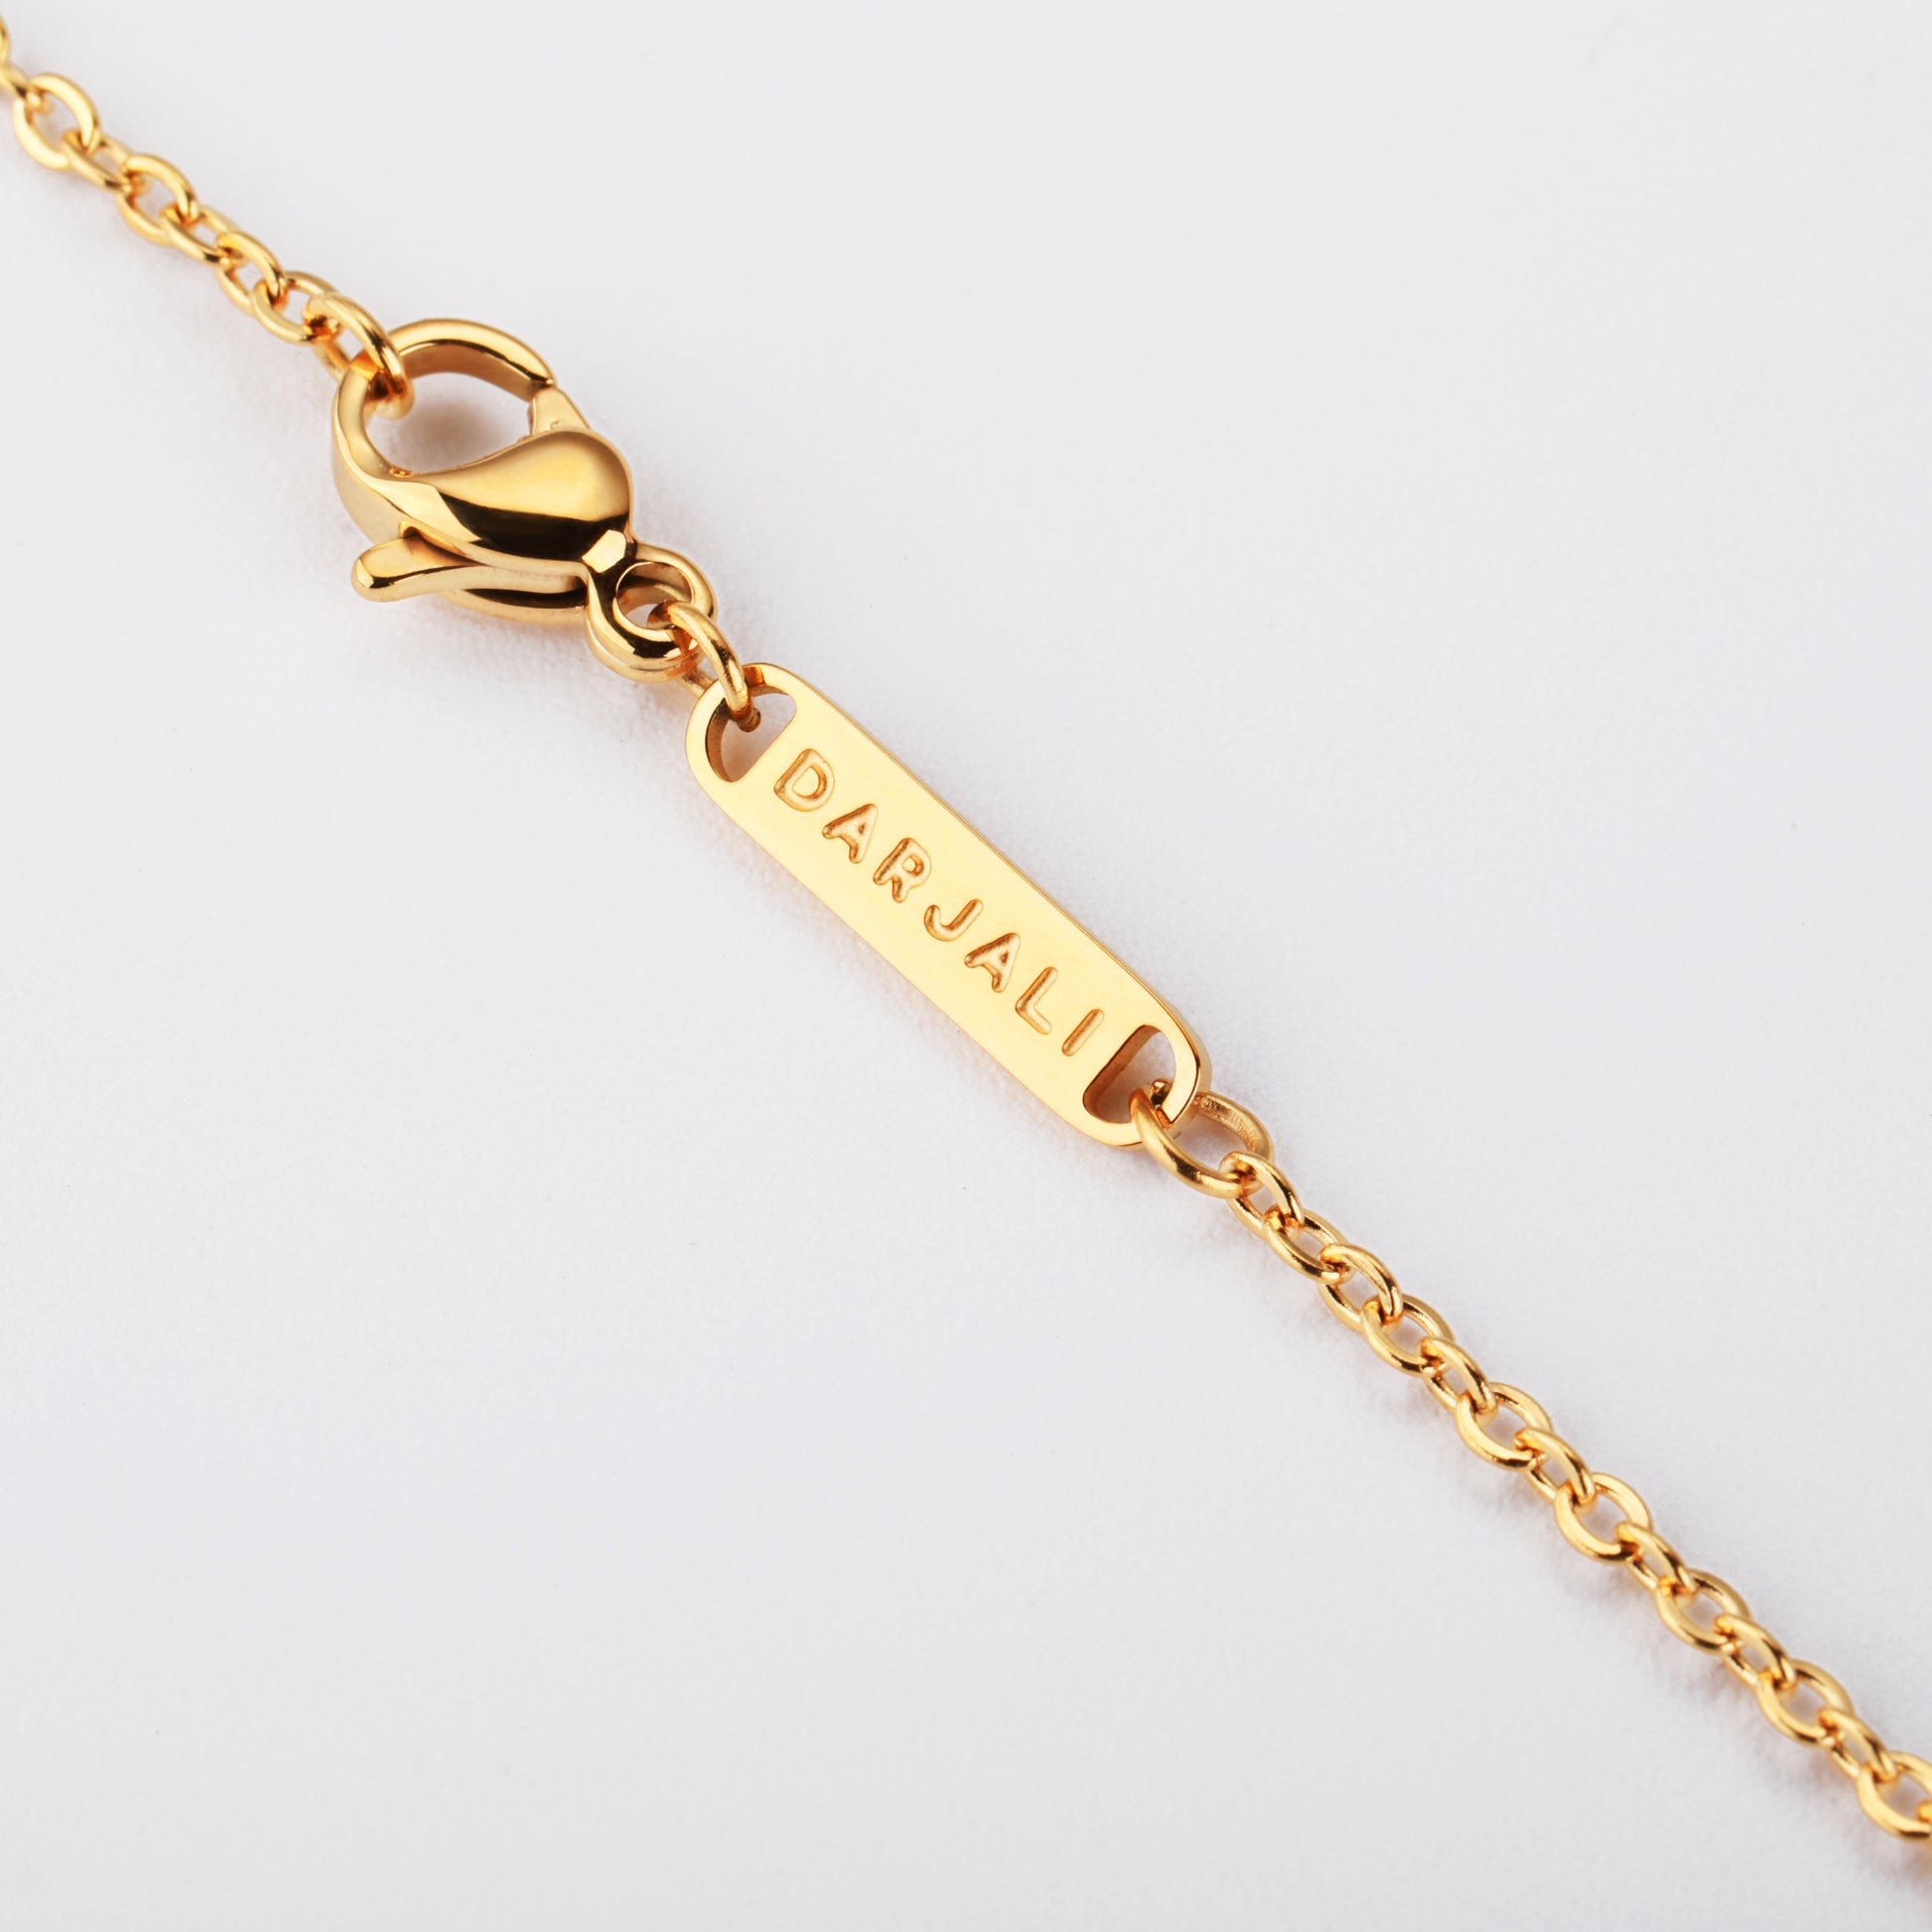 Darjali Jewelry Patience Necklace 18K Gold Chain